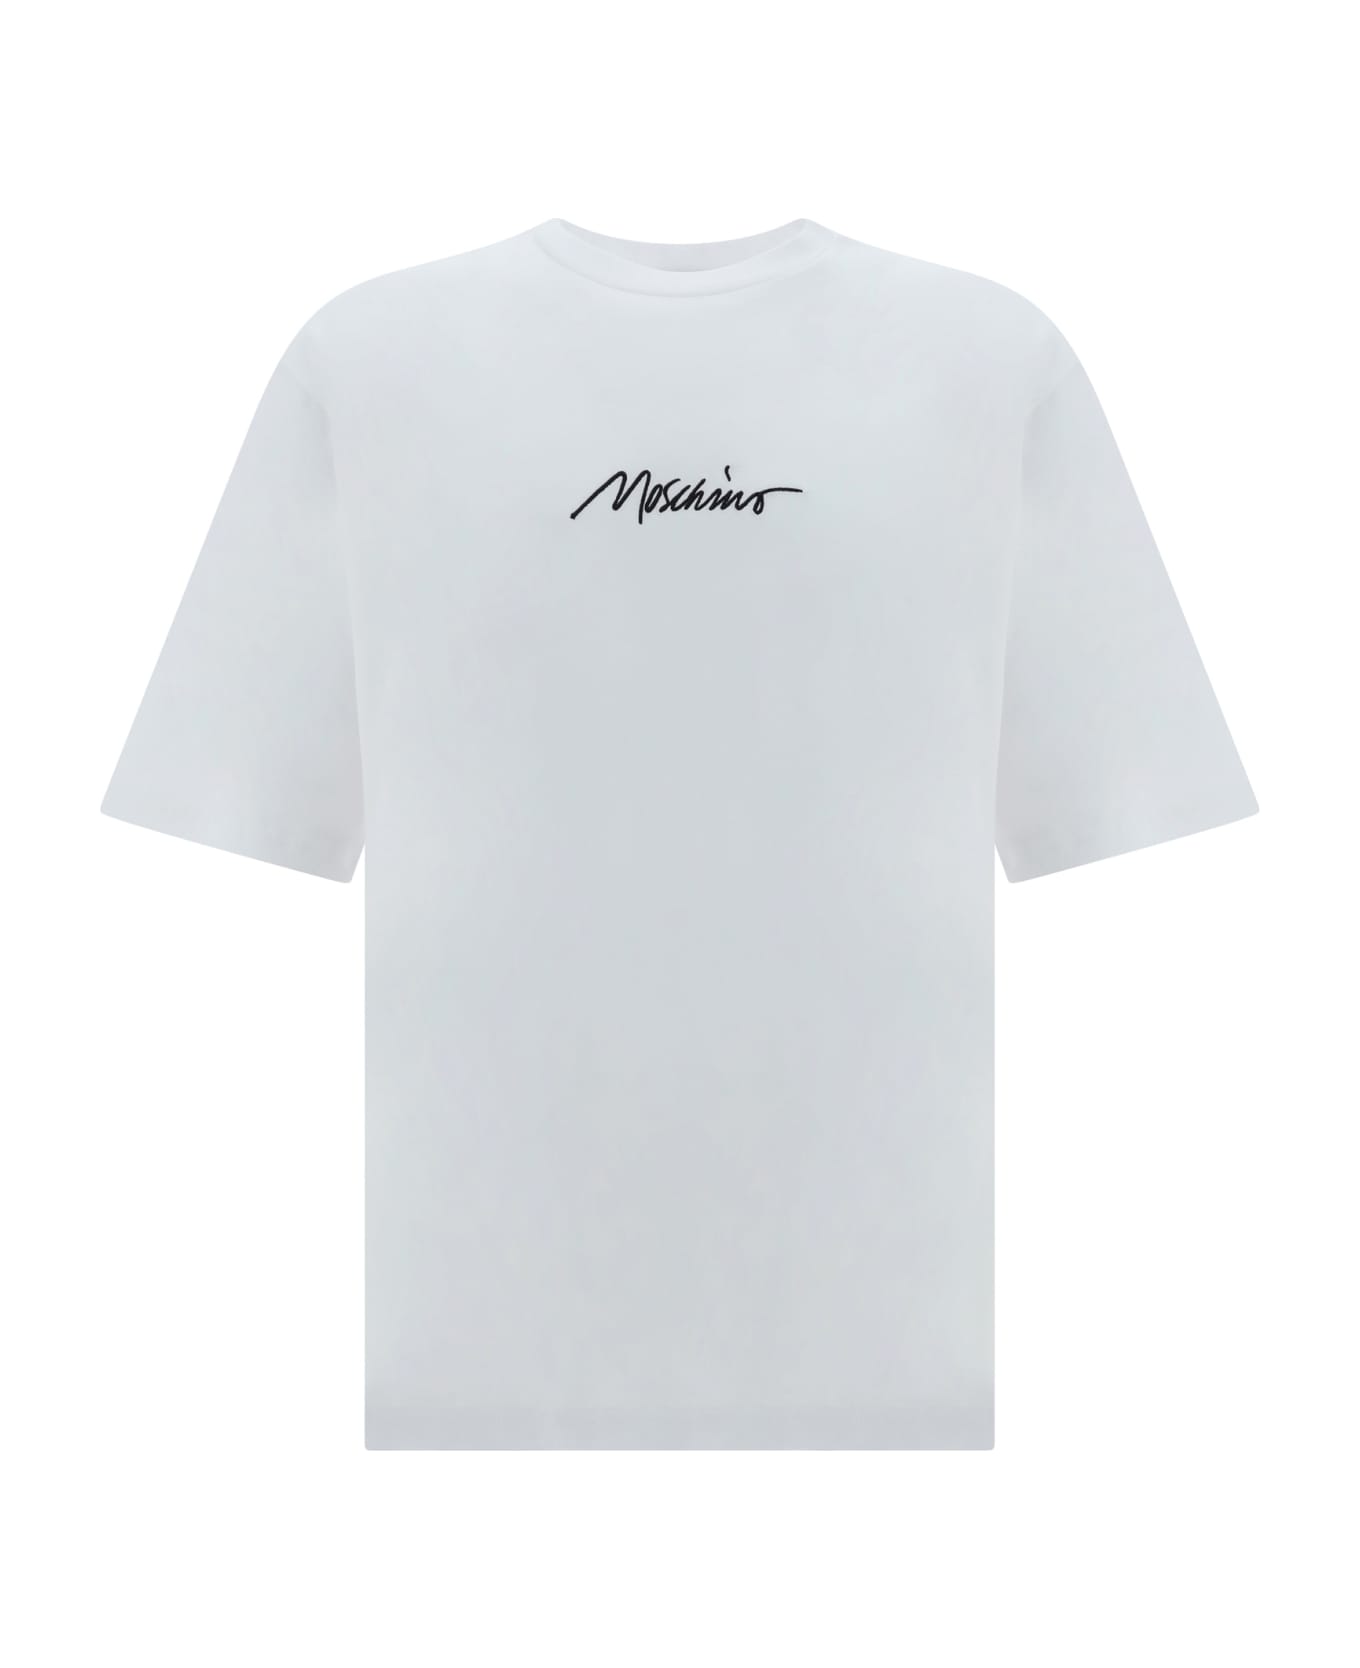 Moschino T-shirt - A1001 シャツ